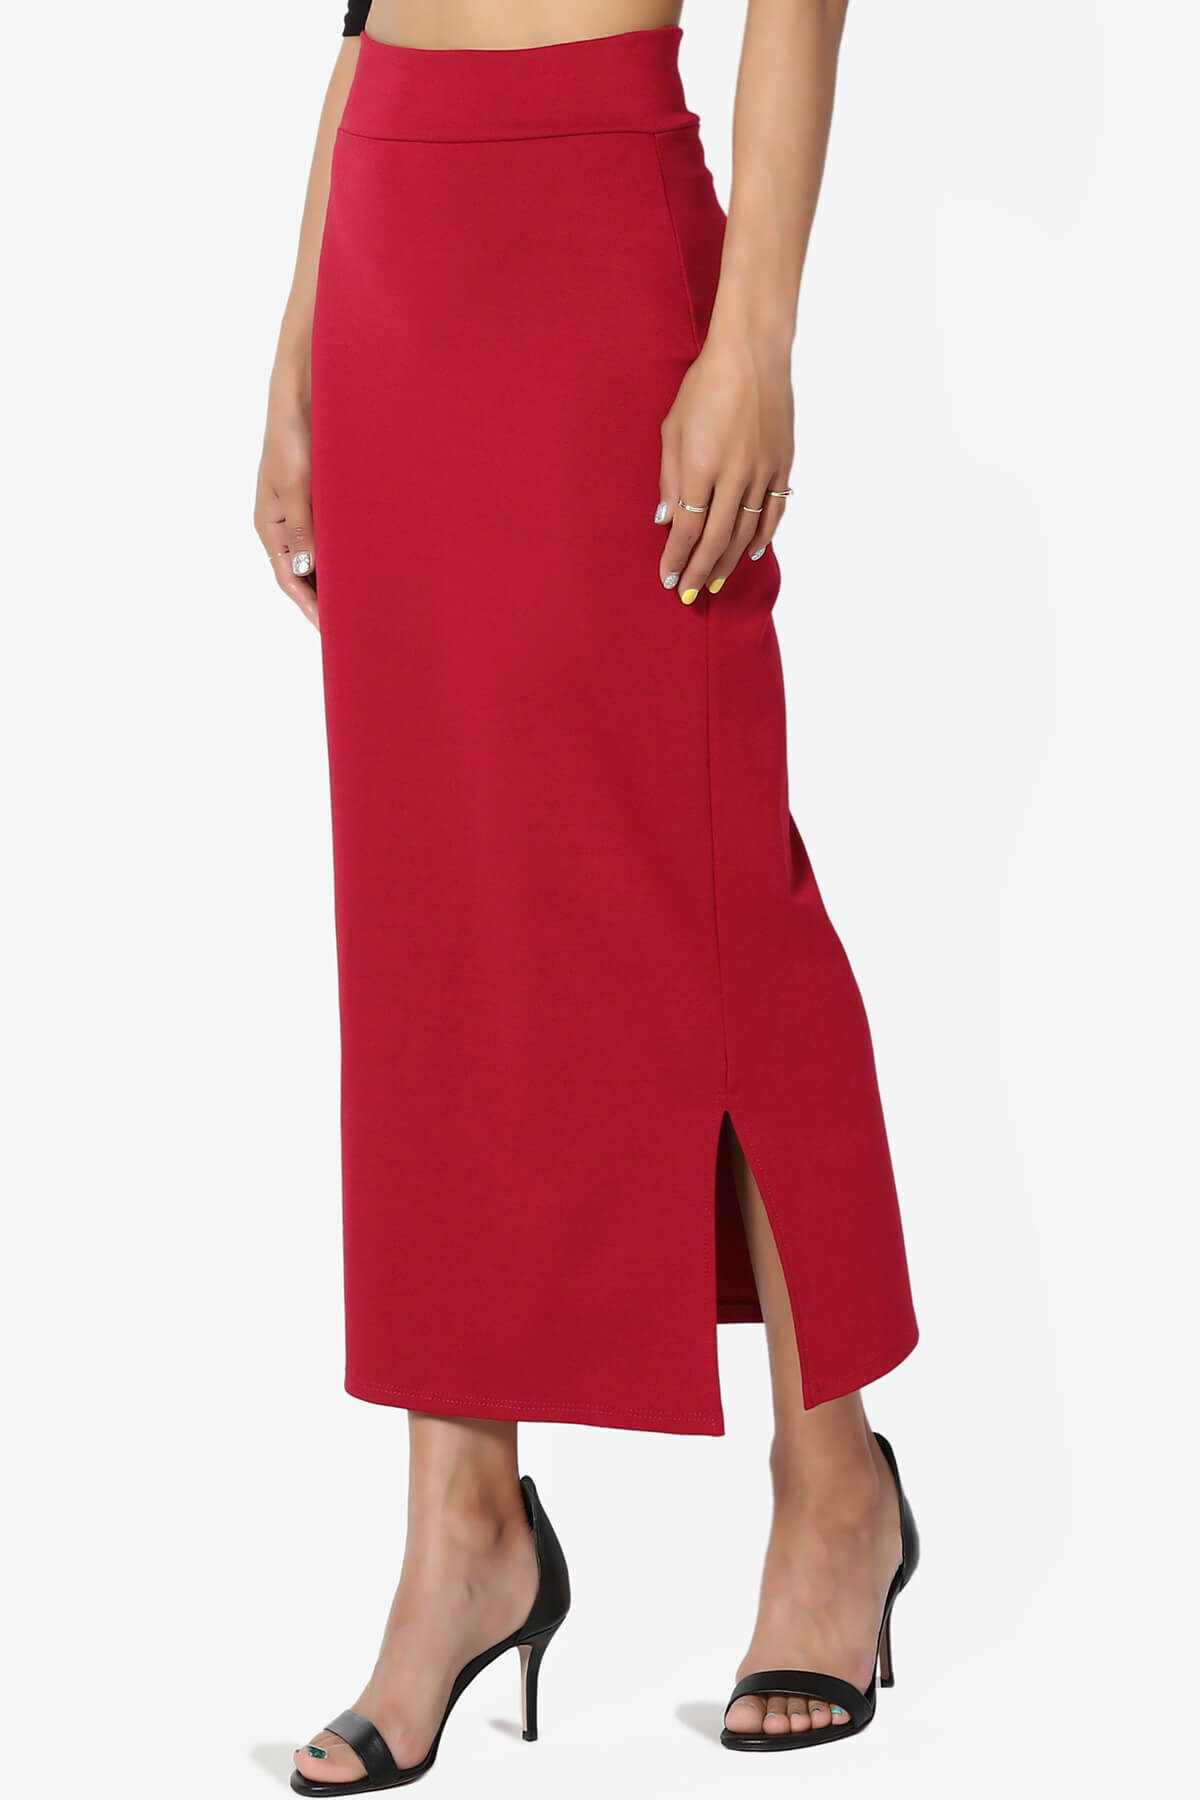 Carleta Mid Calf Pencil Skirt RED_3